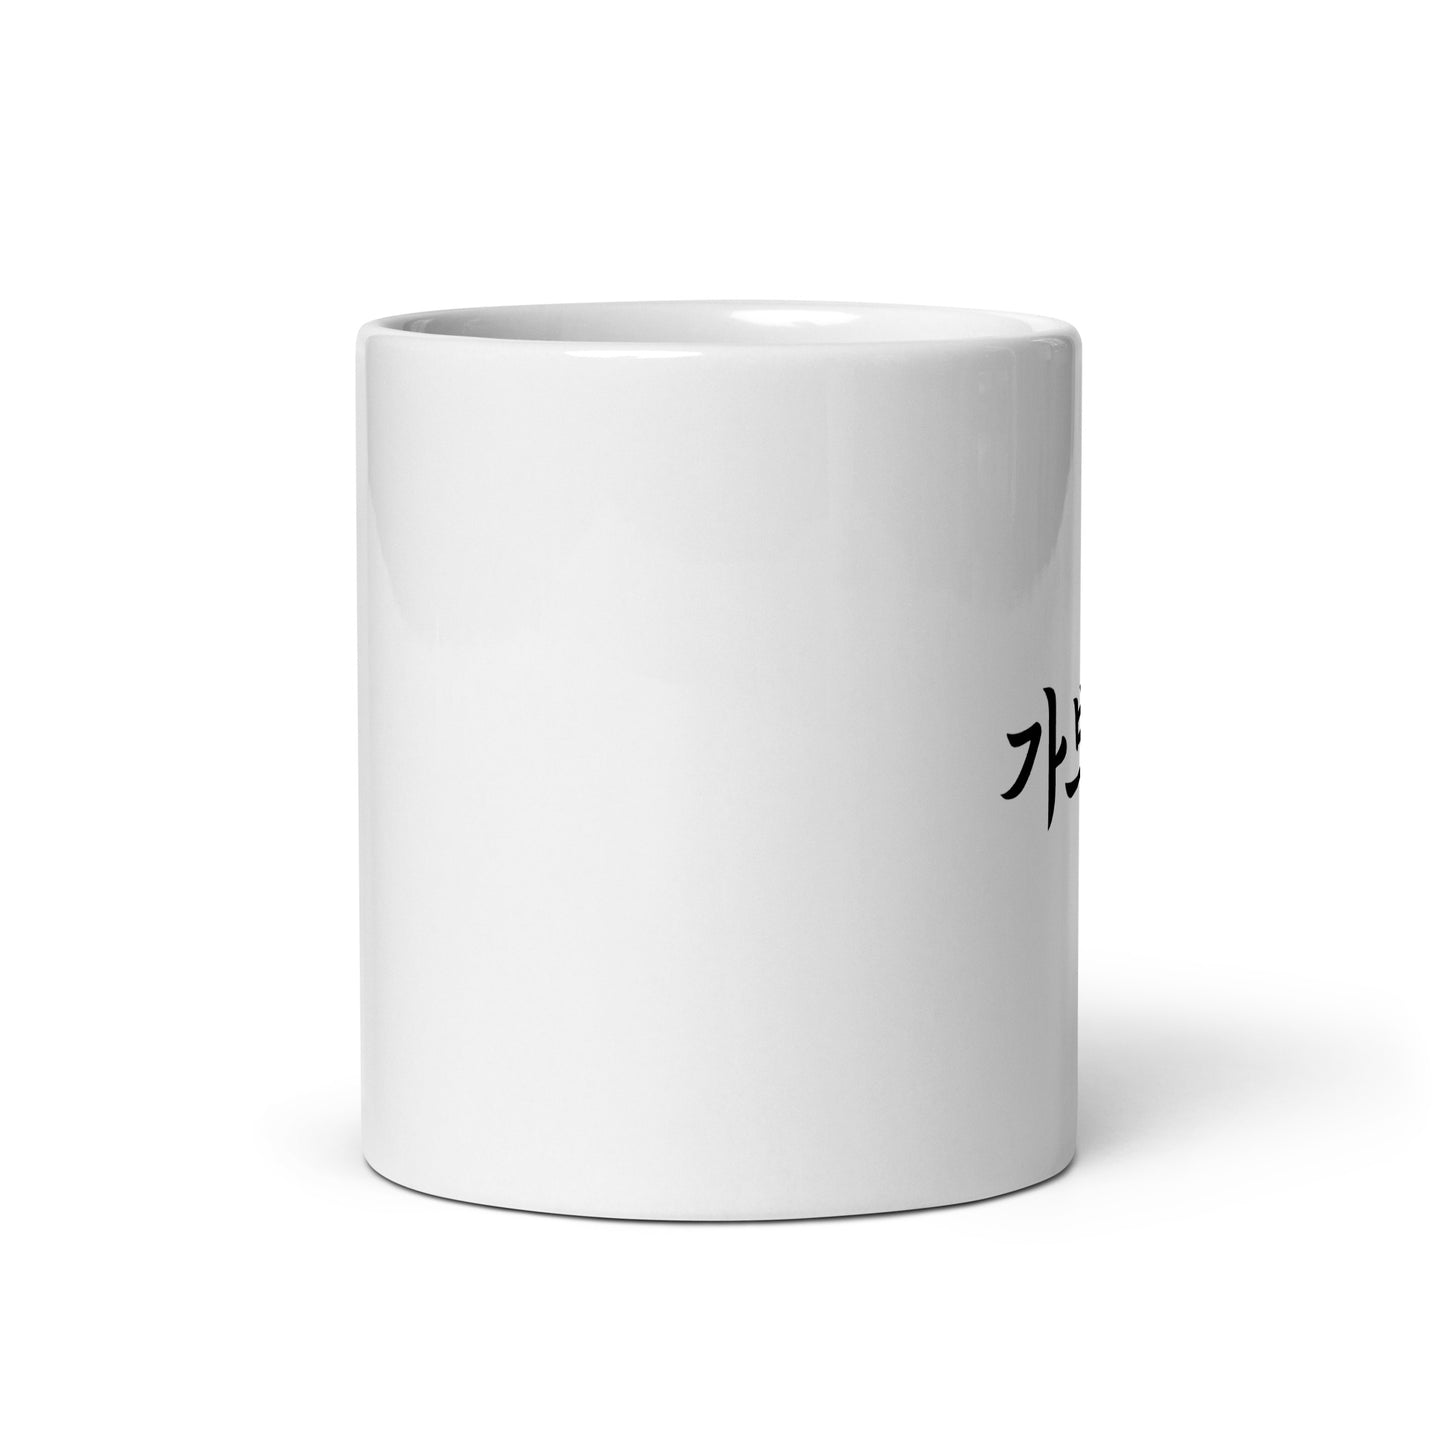 Gabriel in Hangul Custom Name Gift Ceramic Mug